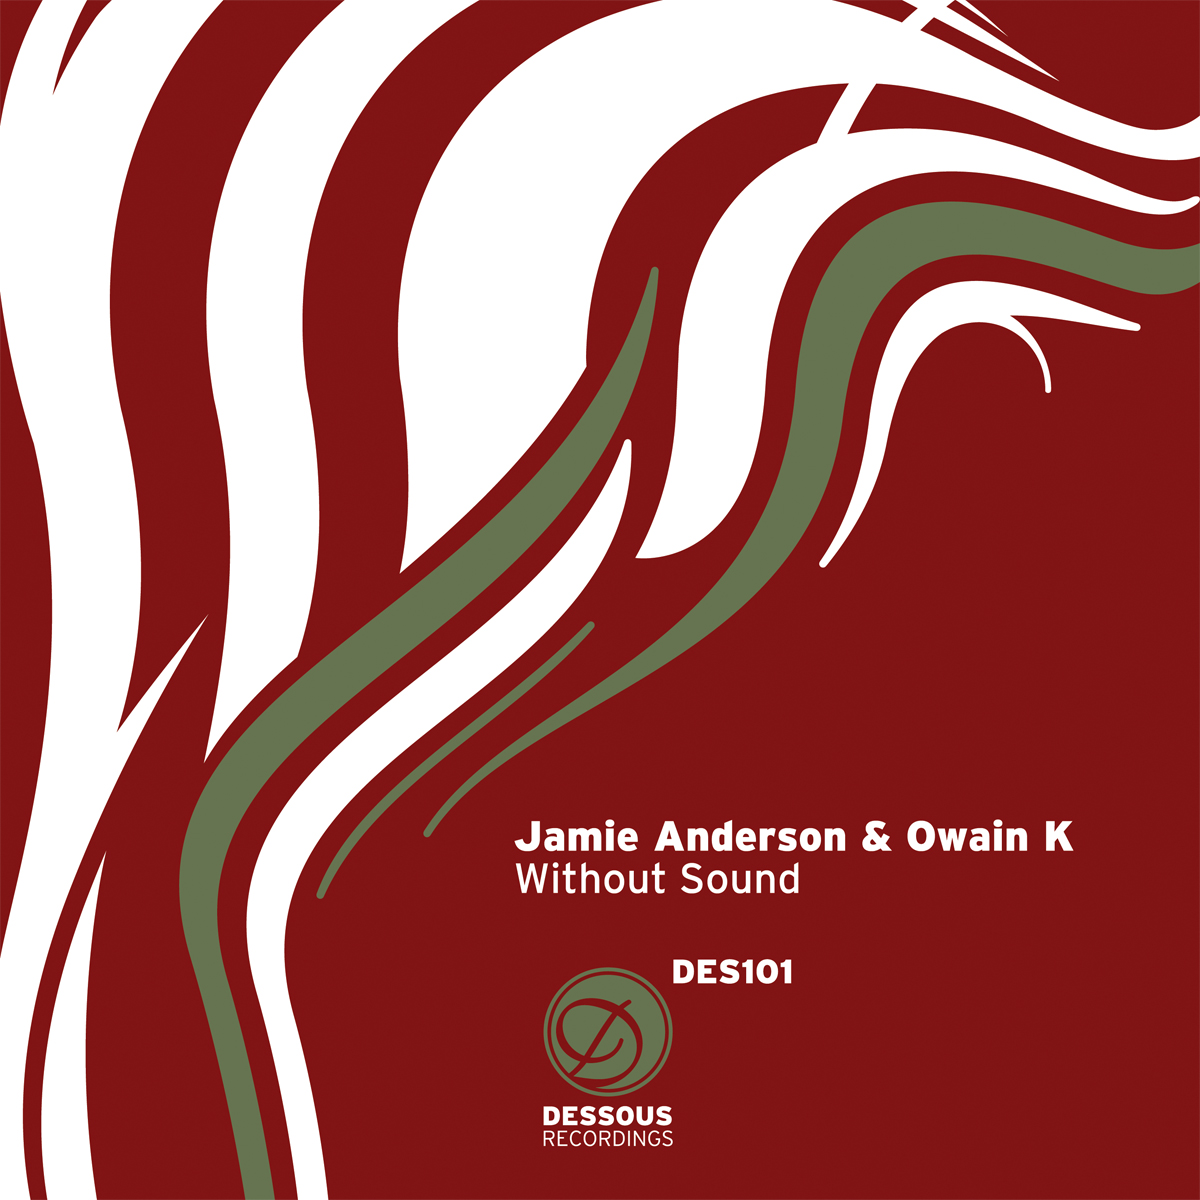 Dj-Limitz: Jamie Anderson & Owain K - 'Without Sound' EP [DES101]